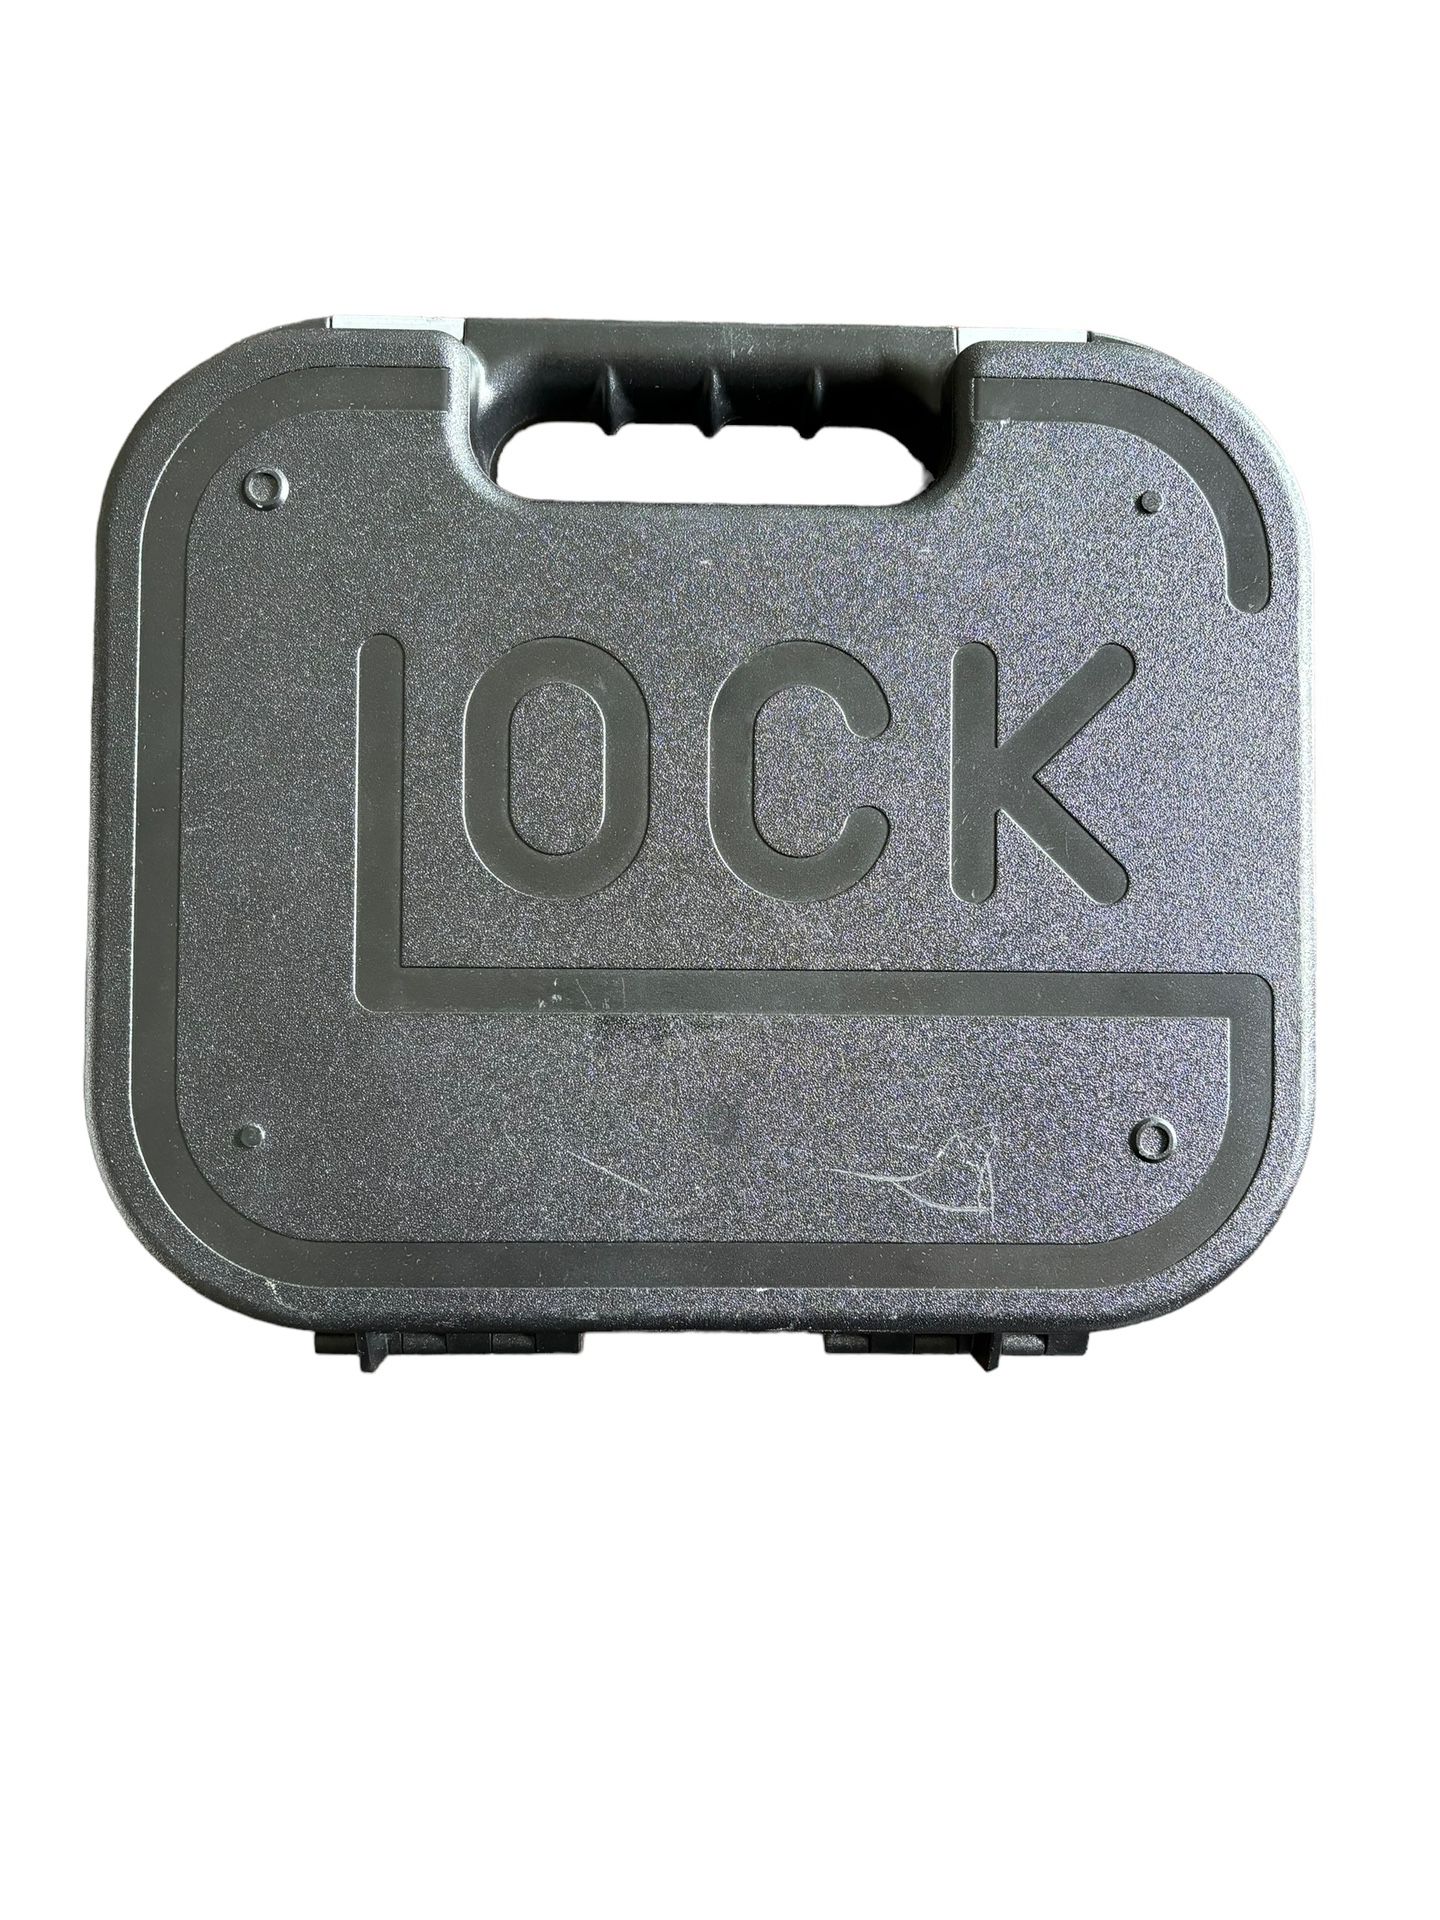 Glock Factory Pistol Clamshell Hard Case